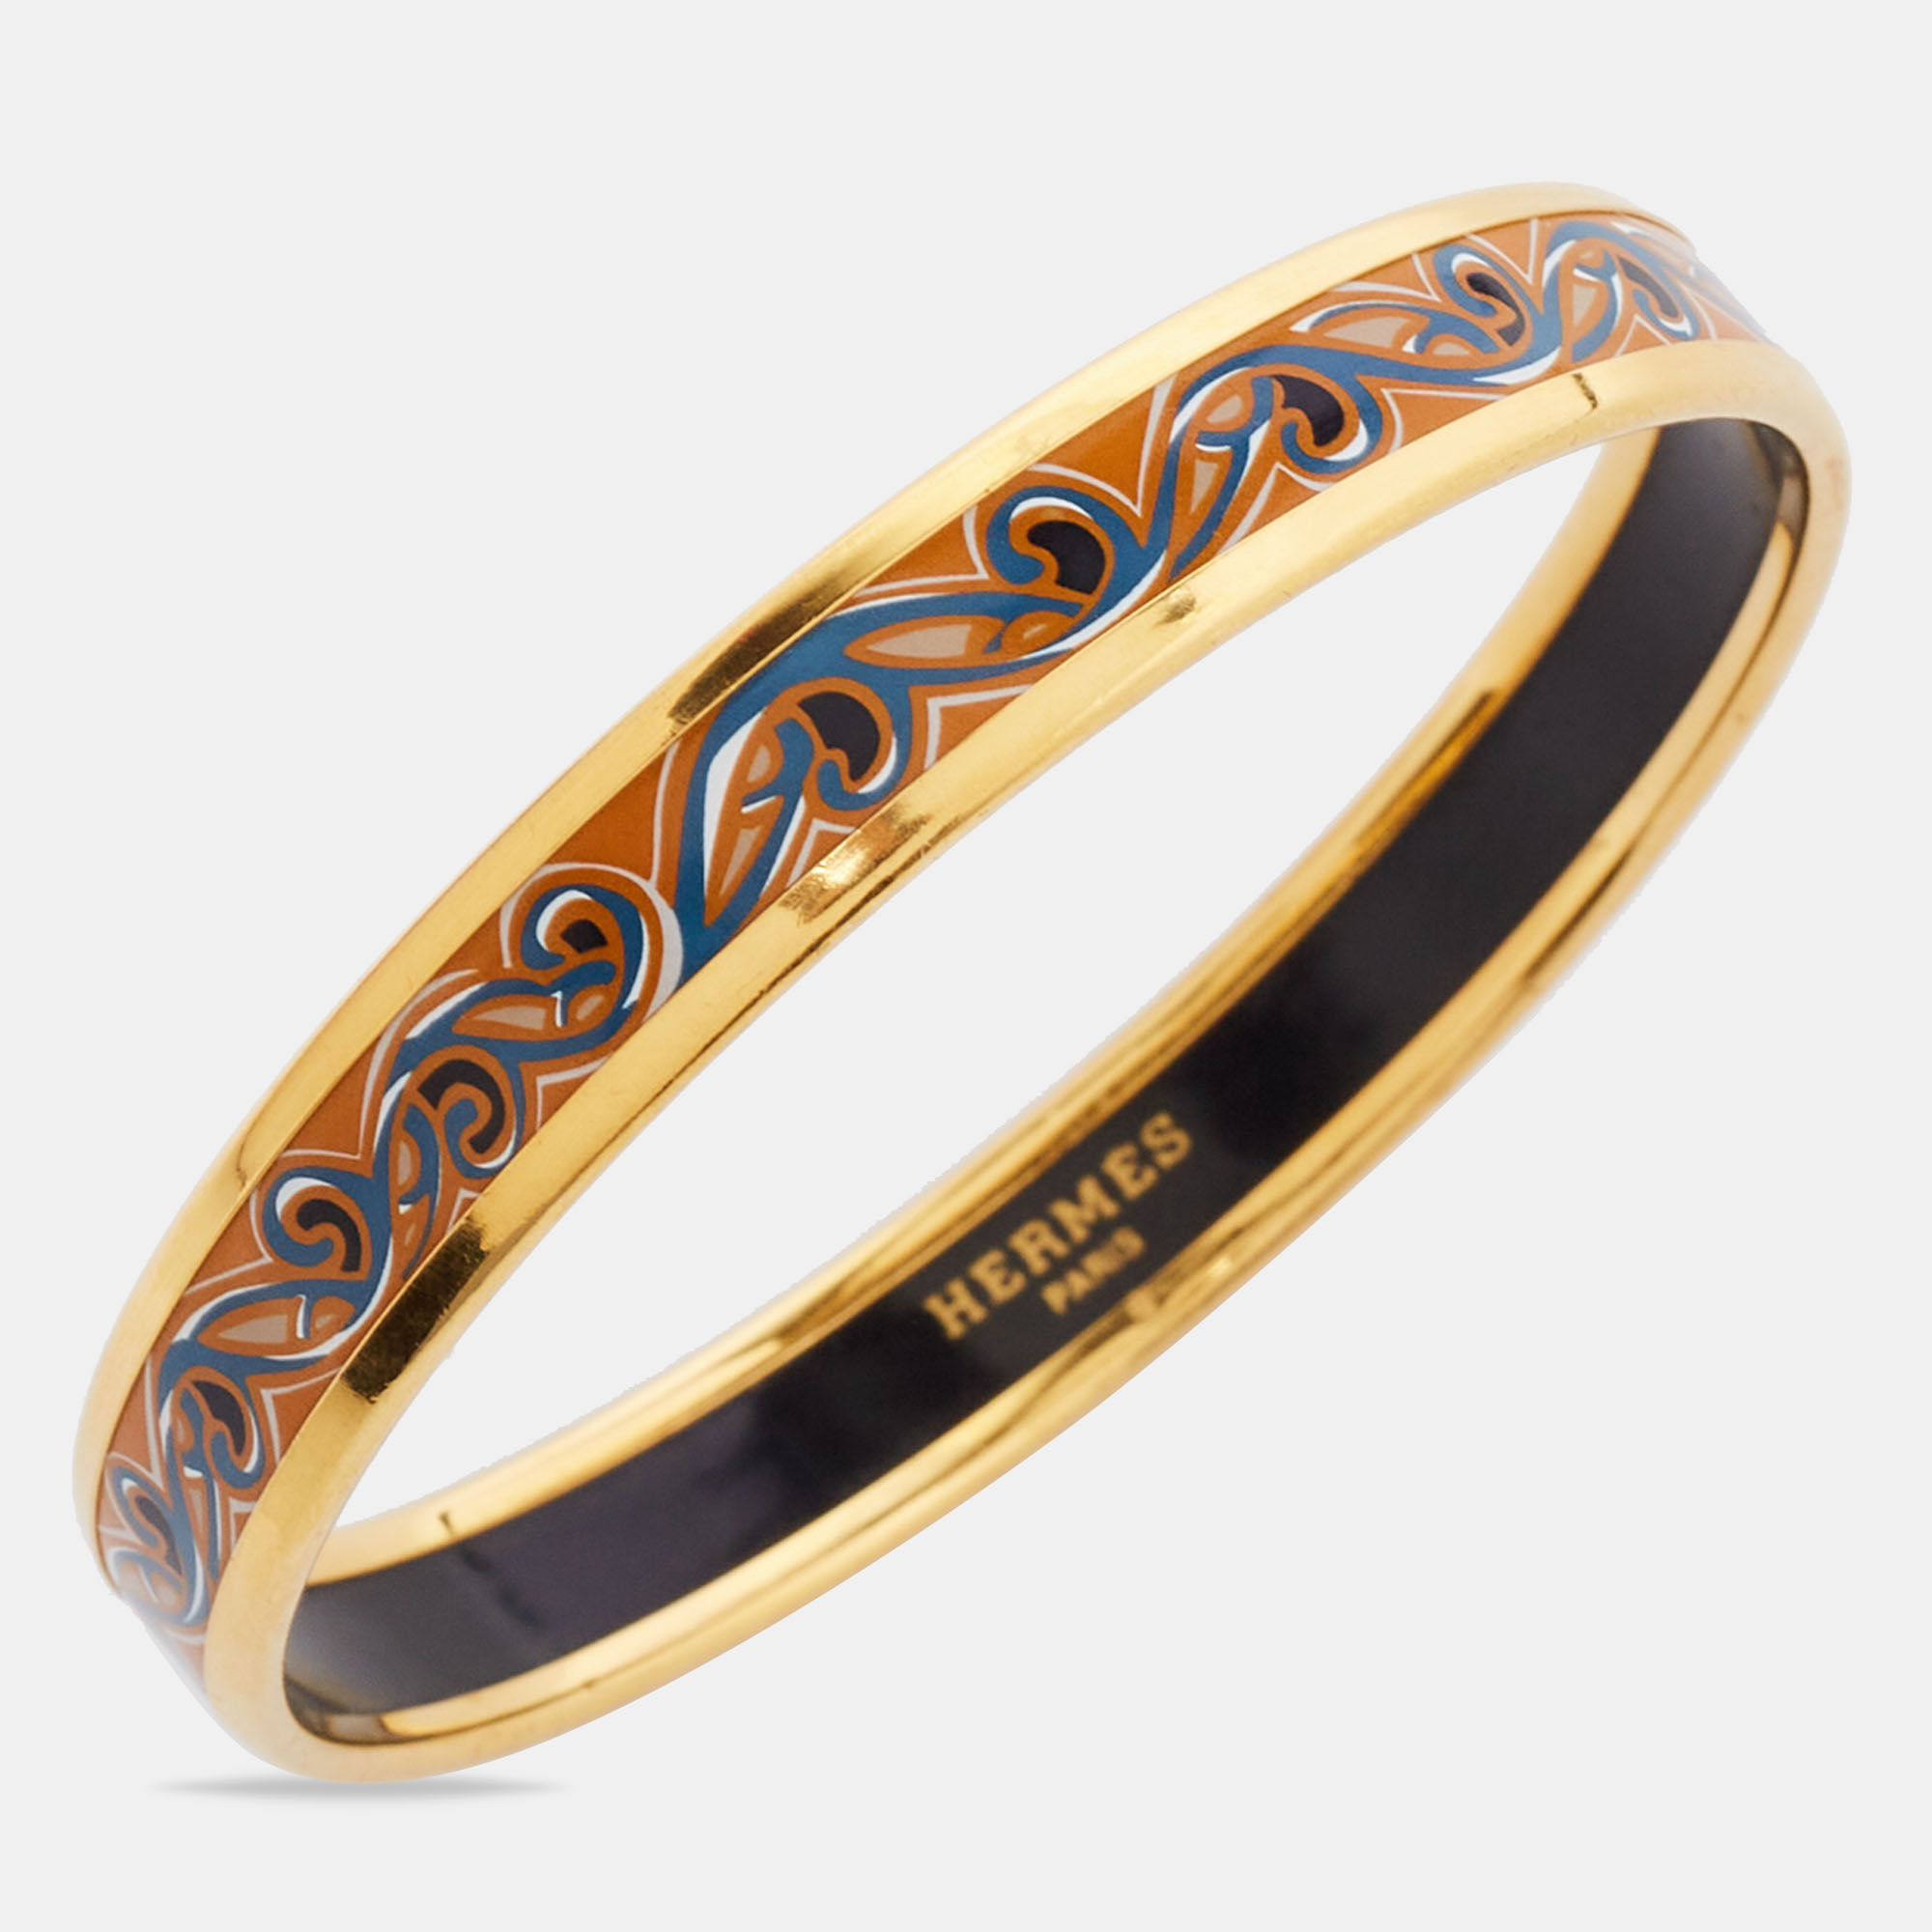 

Hermes Printed Enamel Gold Plated Narrow Bracelet